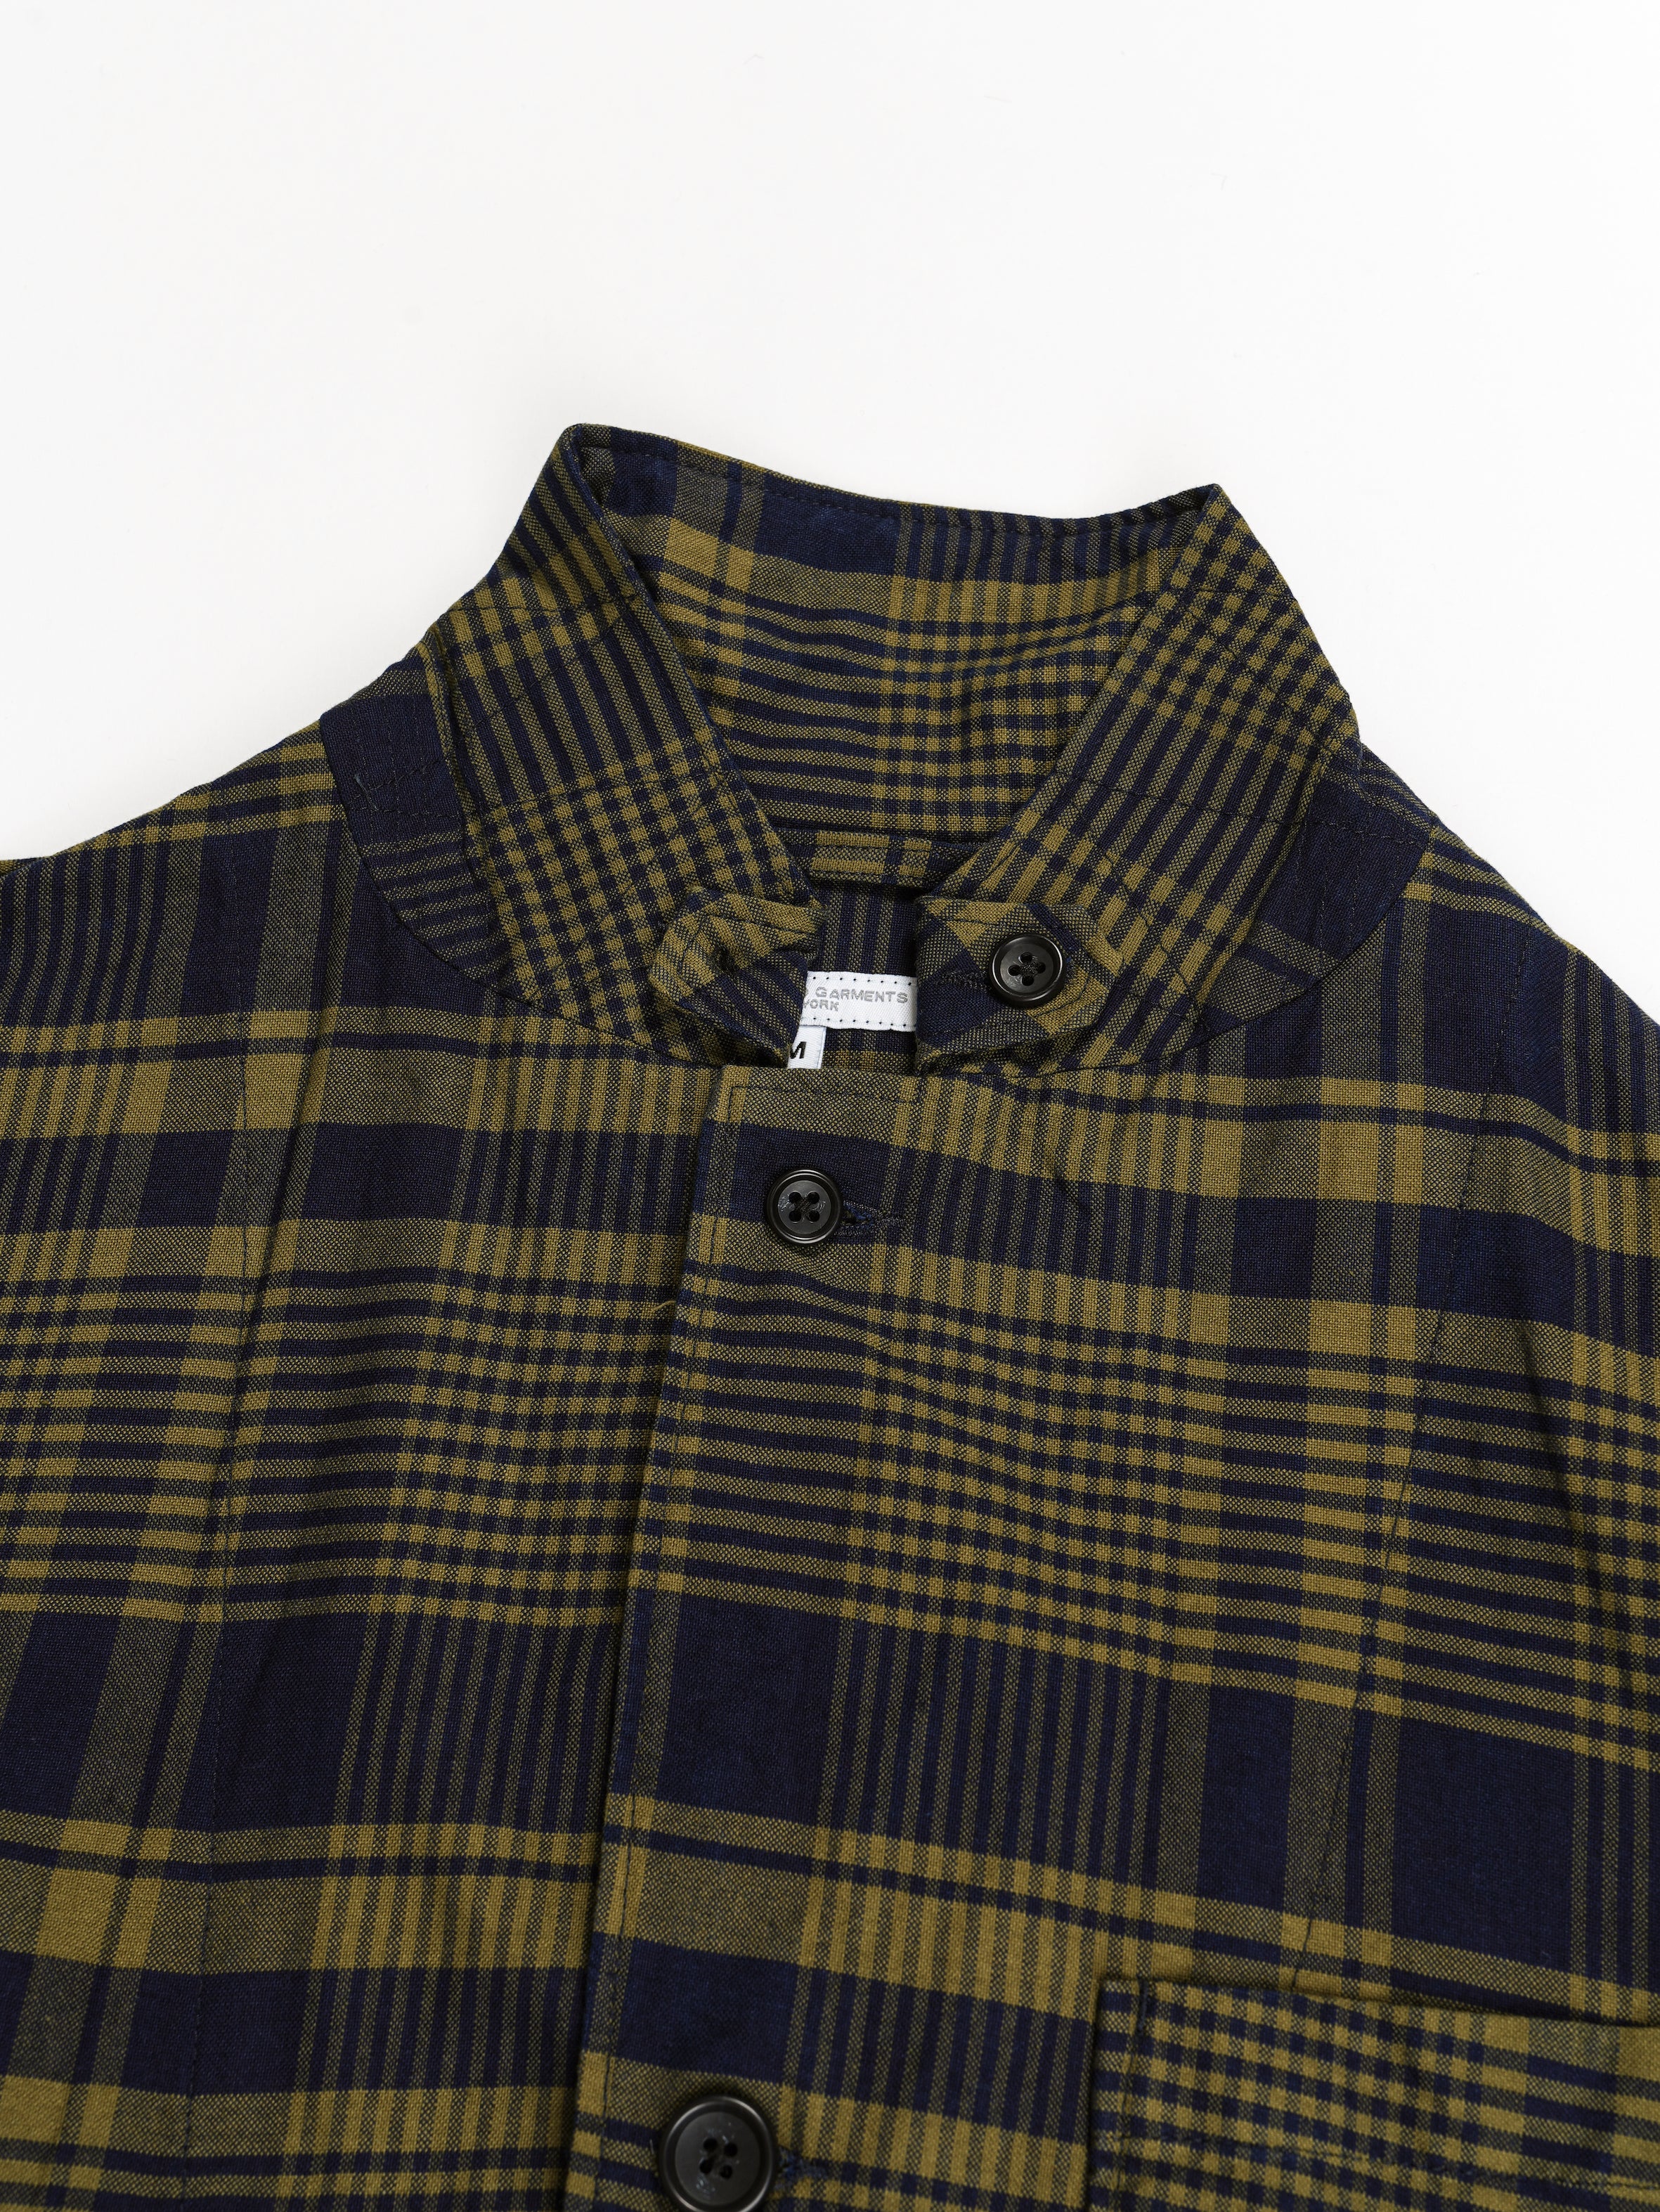 Engineered Garments Loiter Jacket - Navy/Olive Cotton Plaid